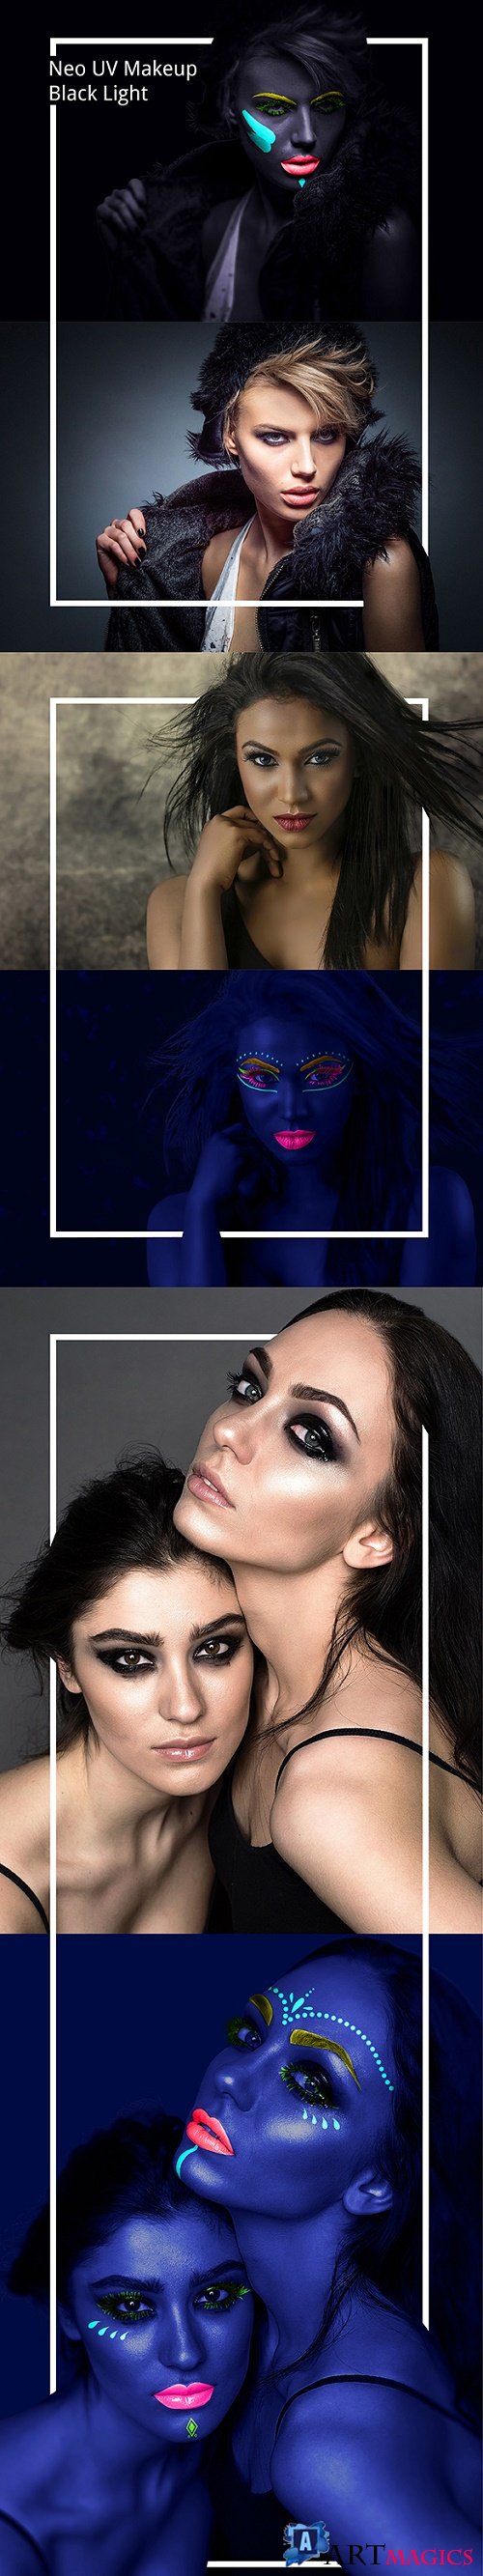 Neo UV Makeup Black Light Photoshop Action 22261749